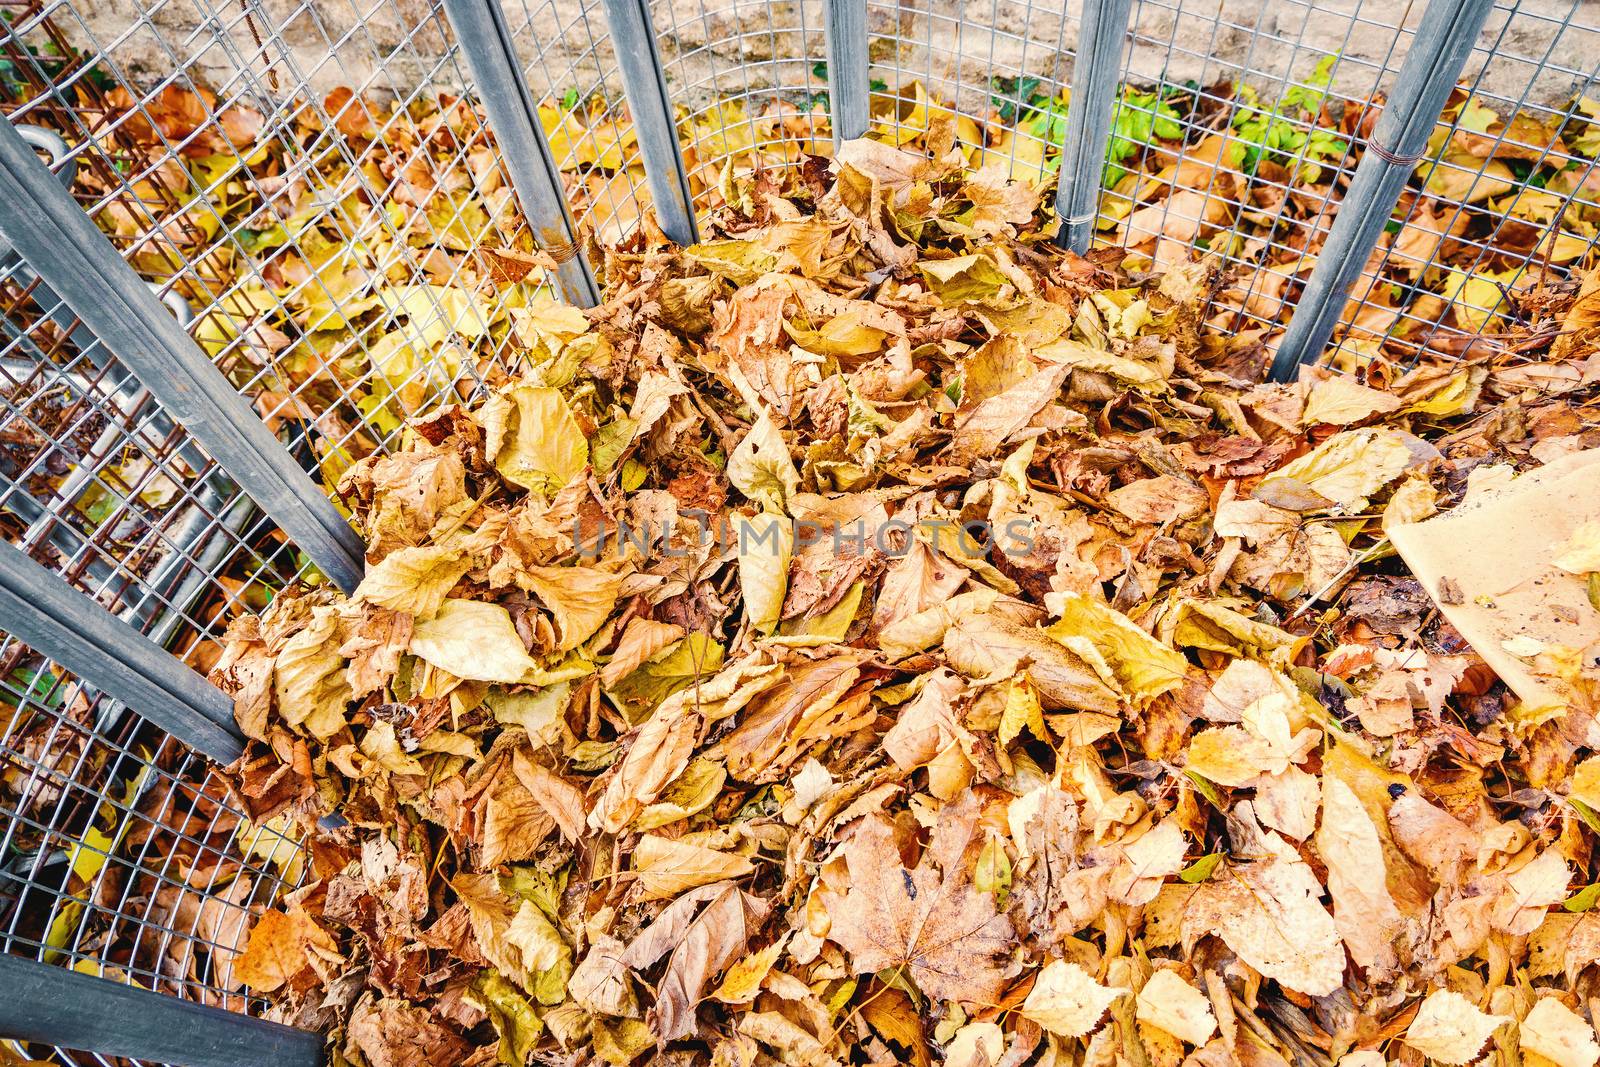 An image of an autumn foliage batch